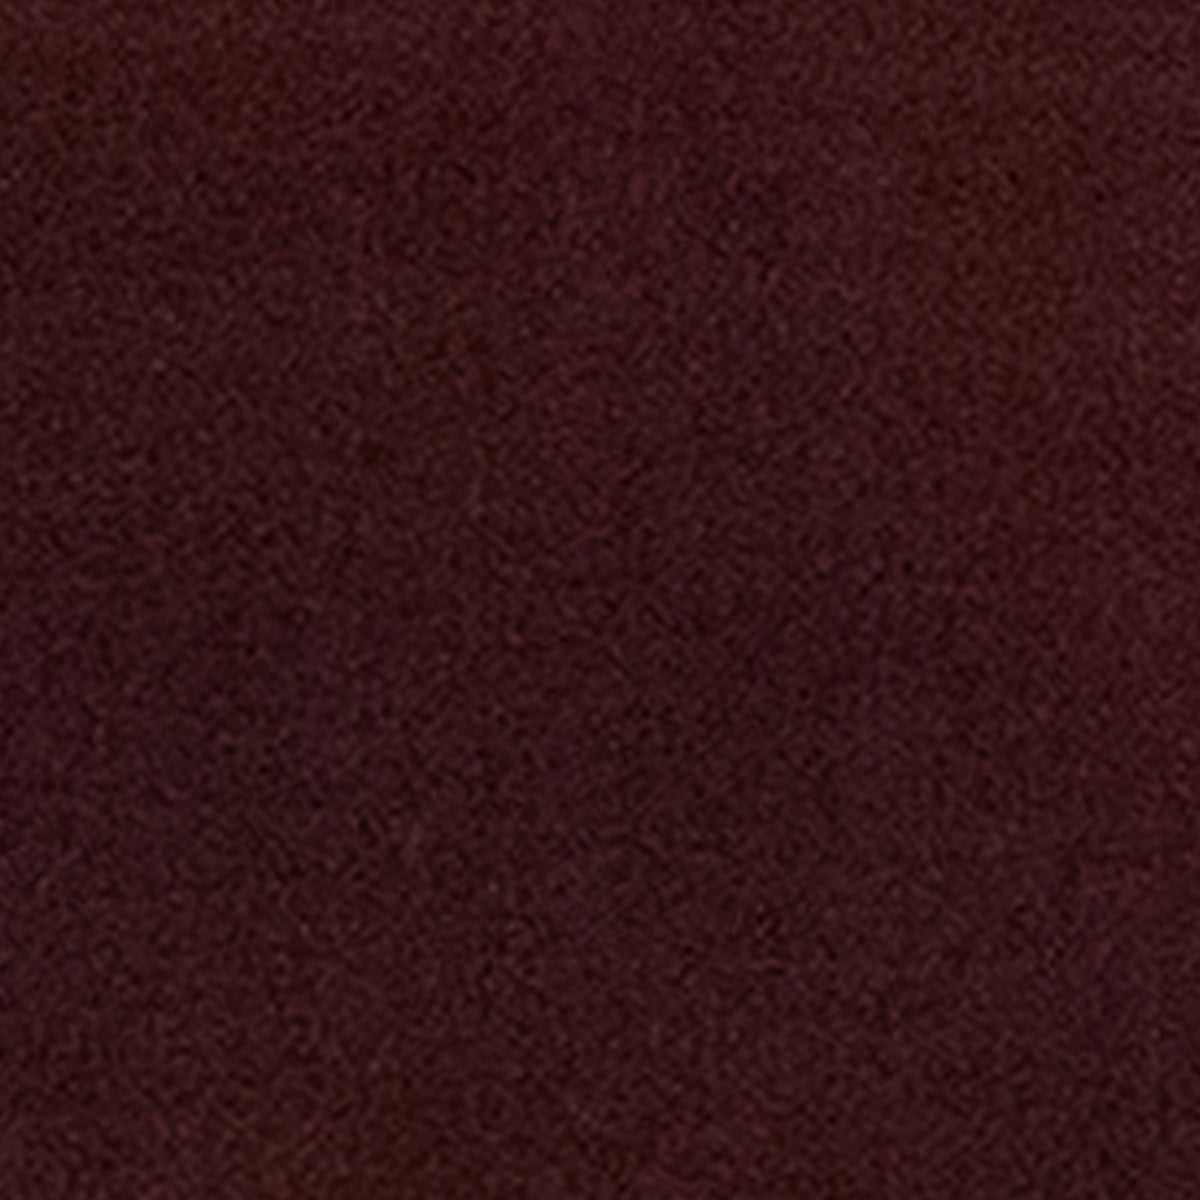 Red Mahogany |#| Folding Chair - Red Mahogany Resin - 800LB Weight Capacity - Vinyl Seat